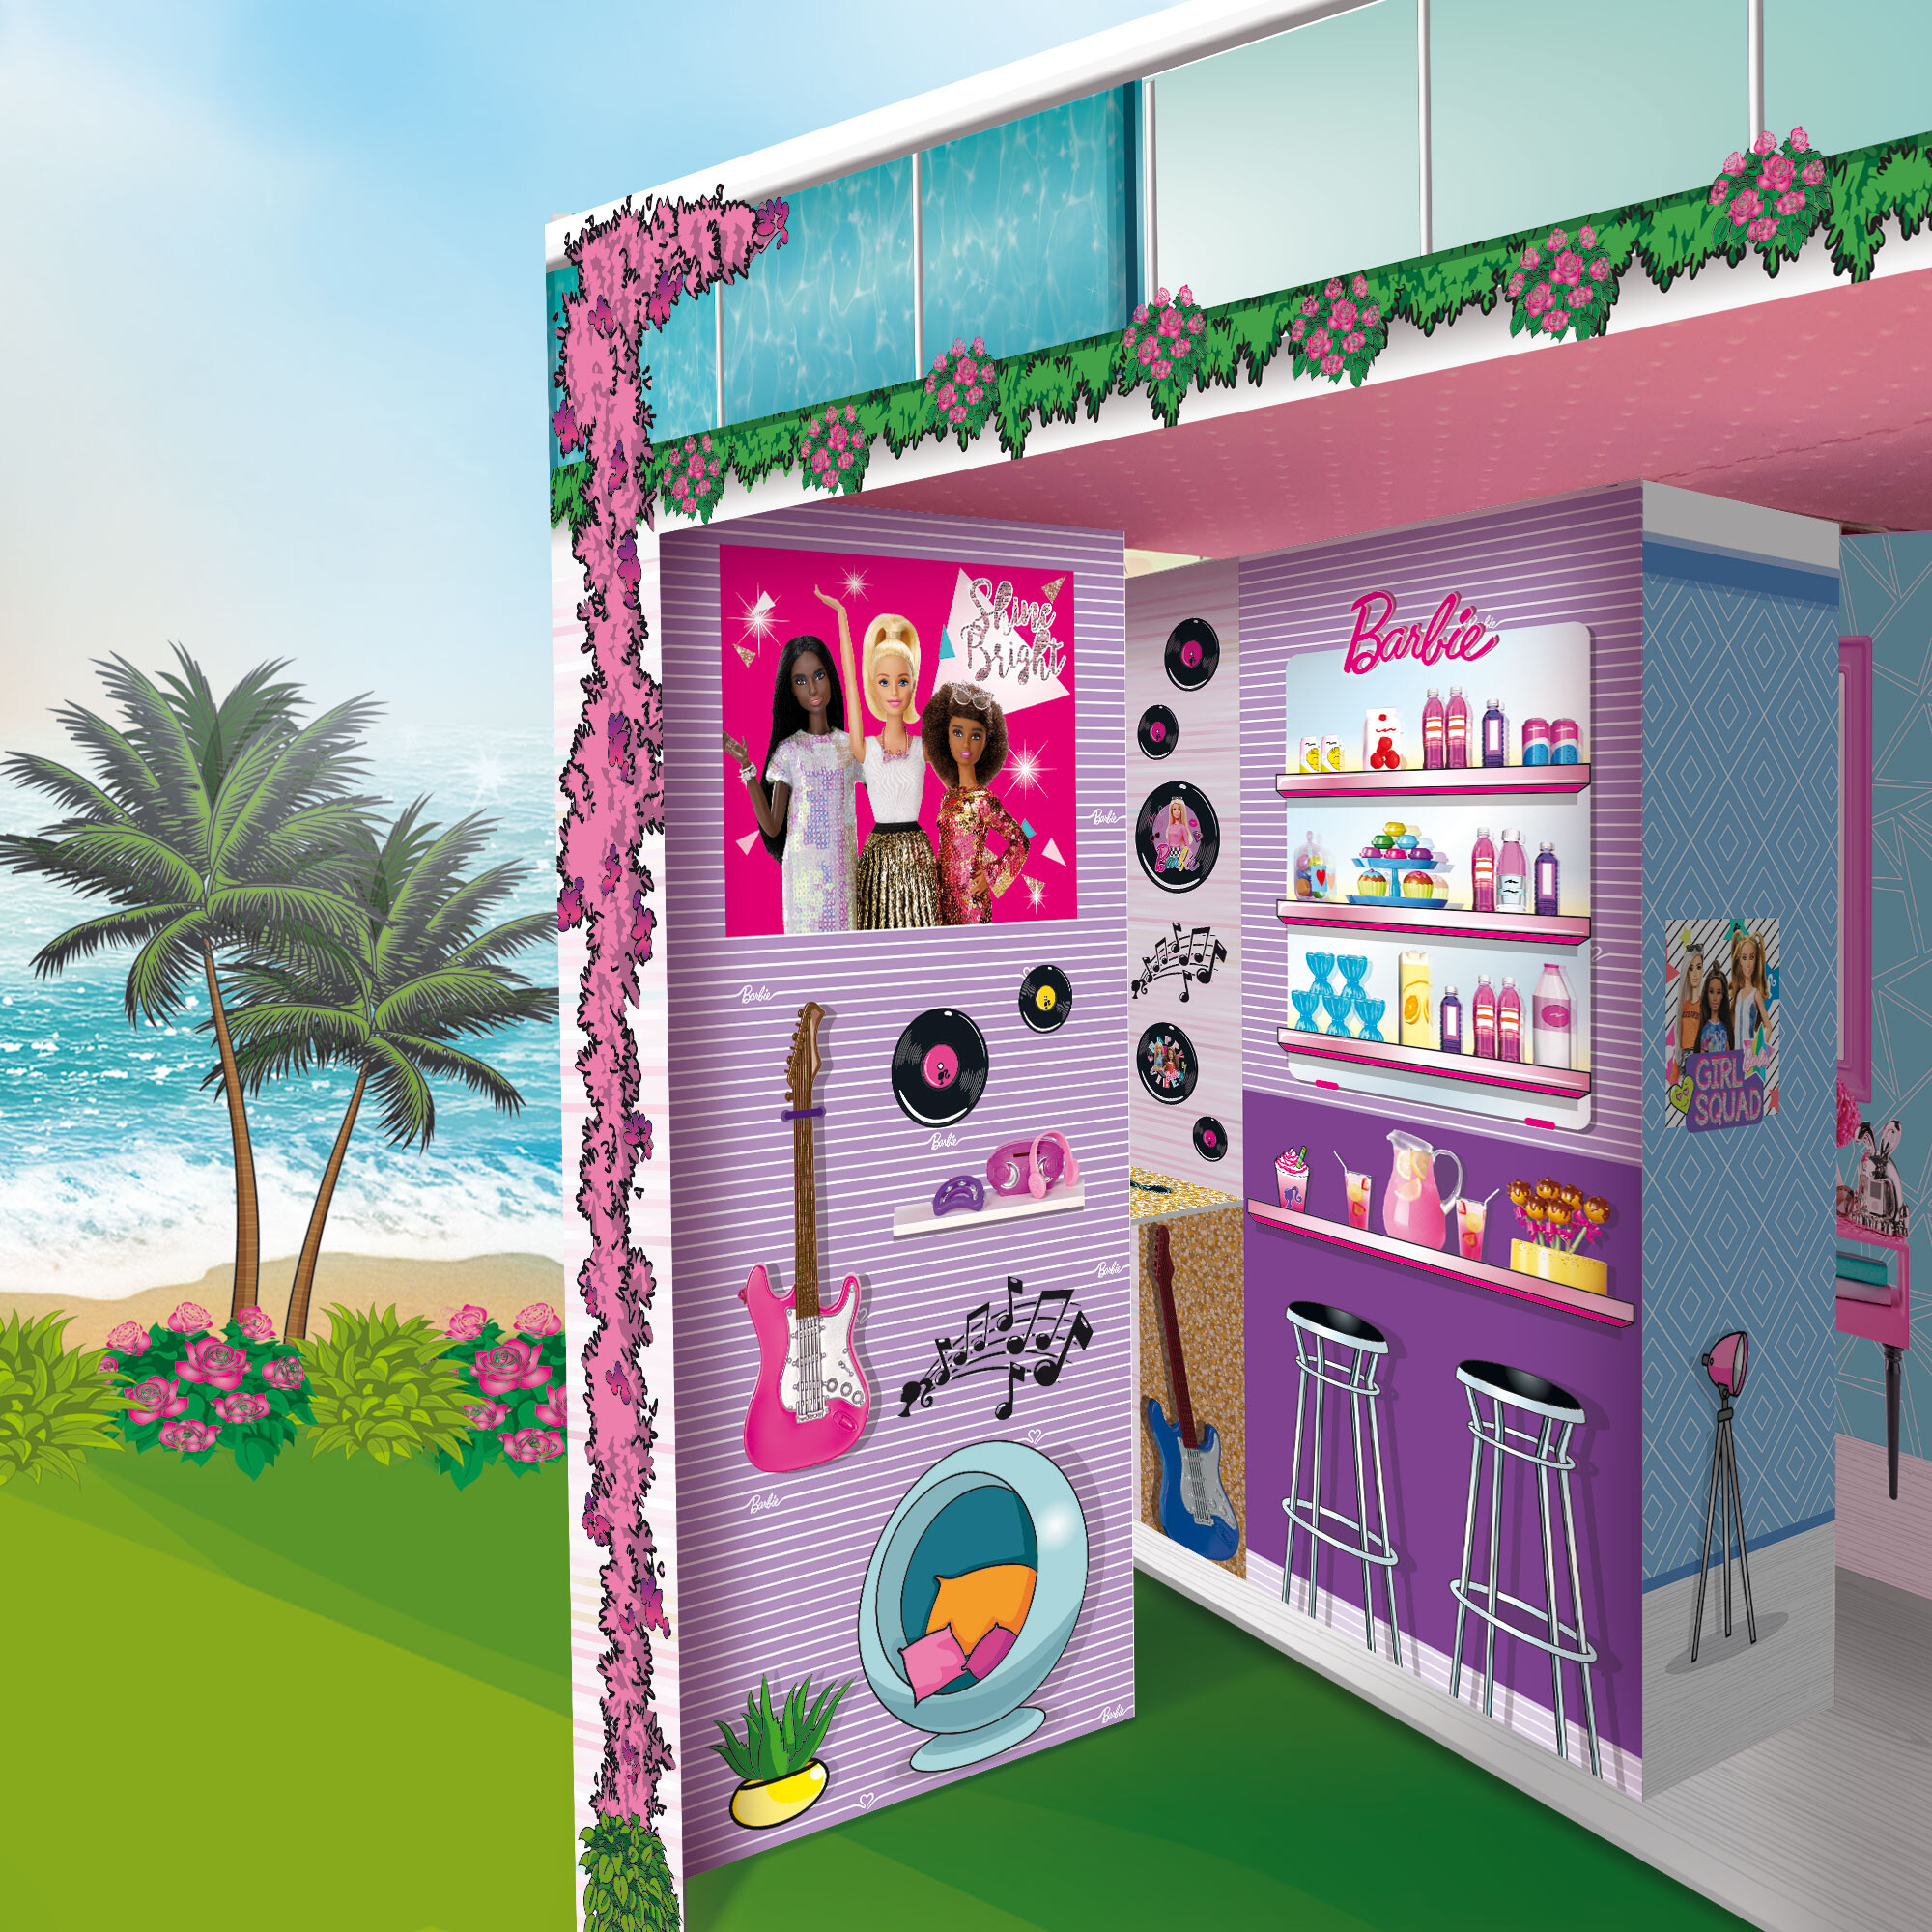 Barbie dream summer villa - LISCIANI